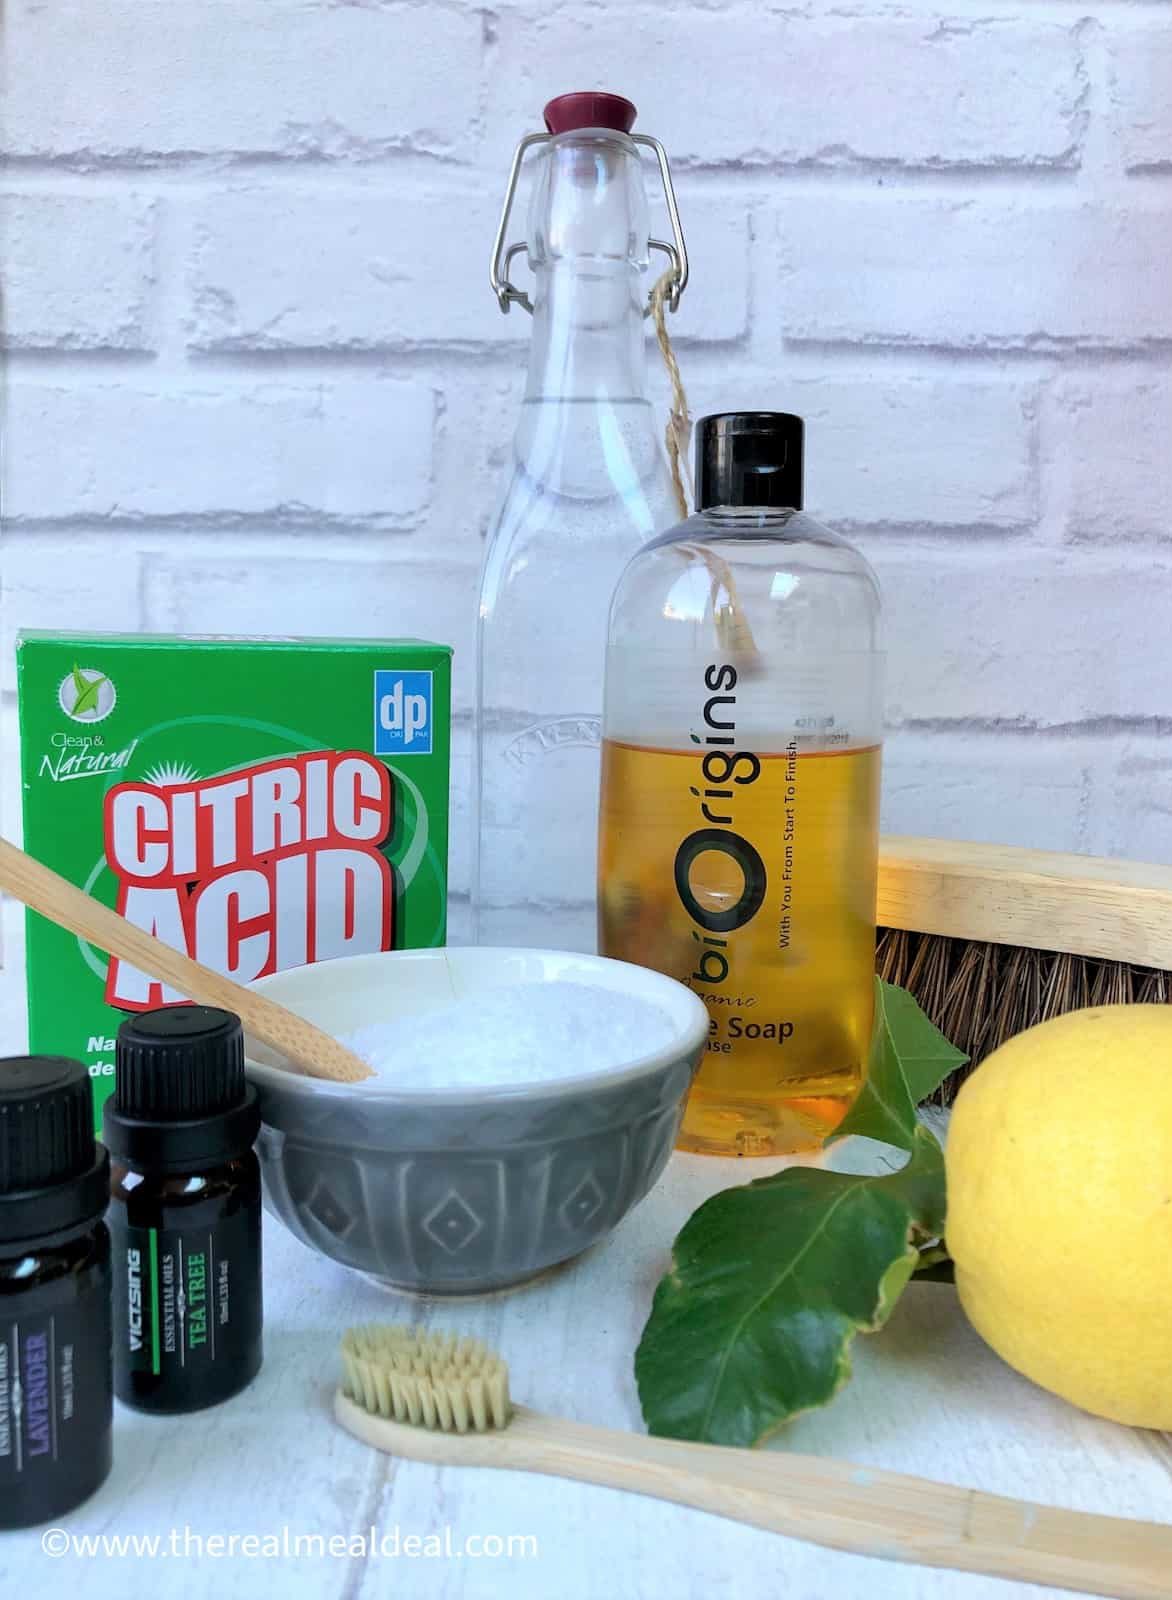 eco cleaning products essential oils box citric acid white vinegar castile soap lemon hard wooden brush used toothbrush dishwasher salt in bowl